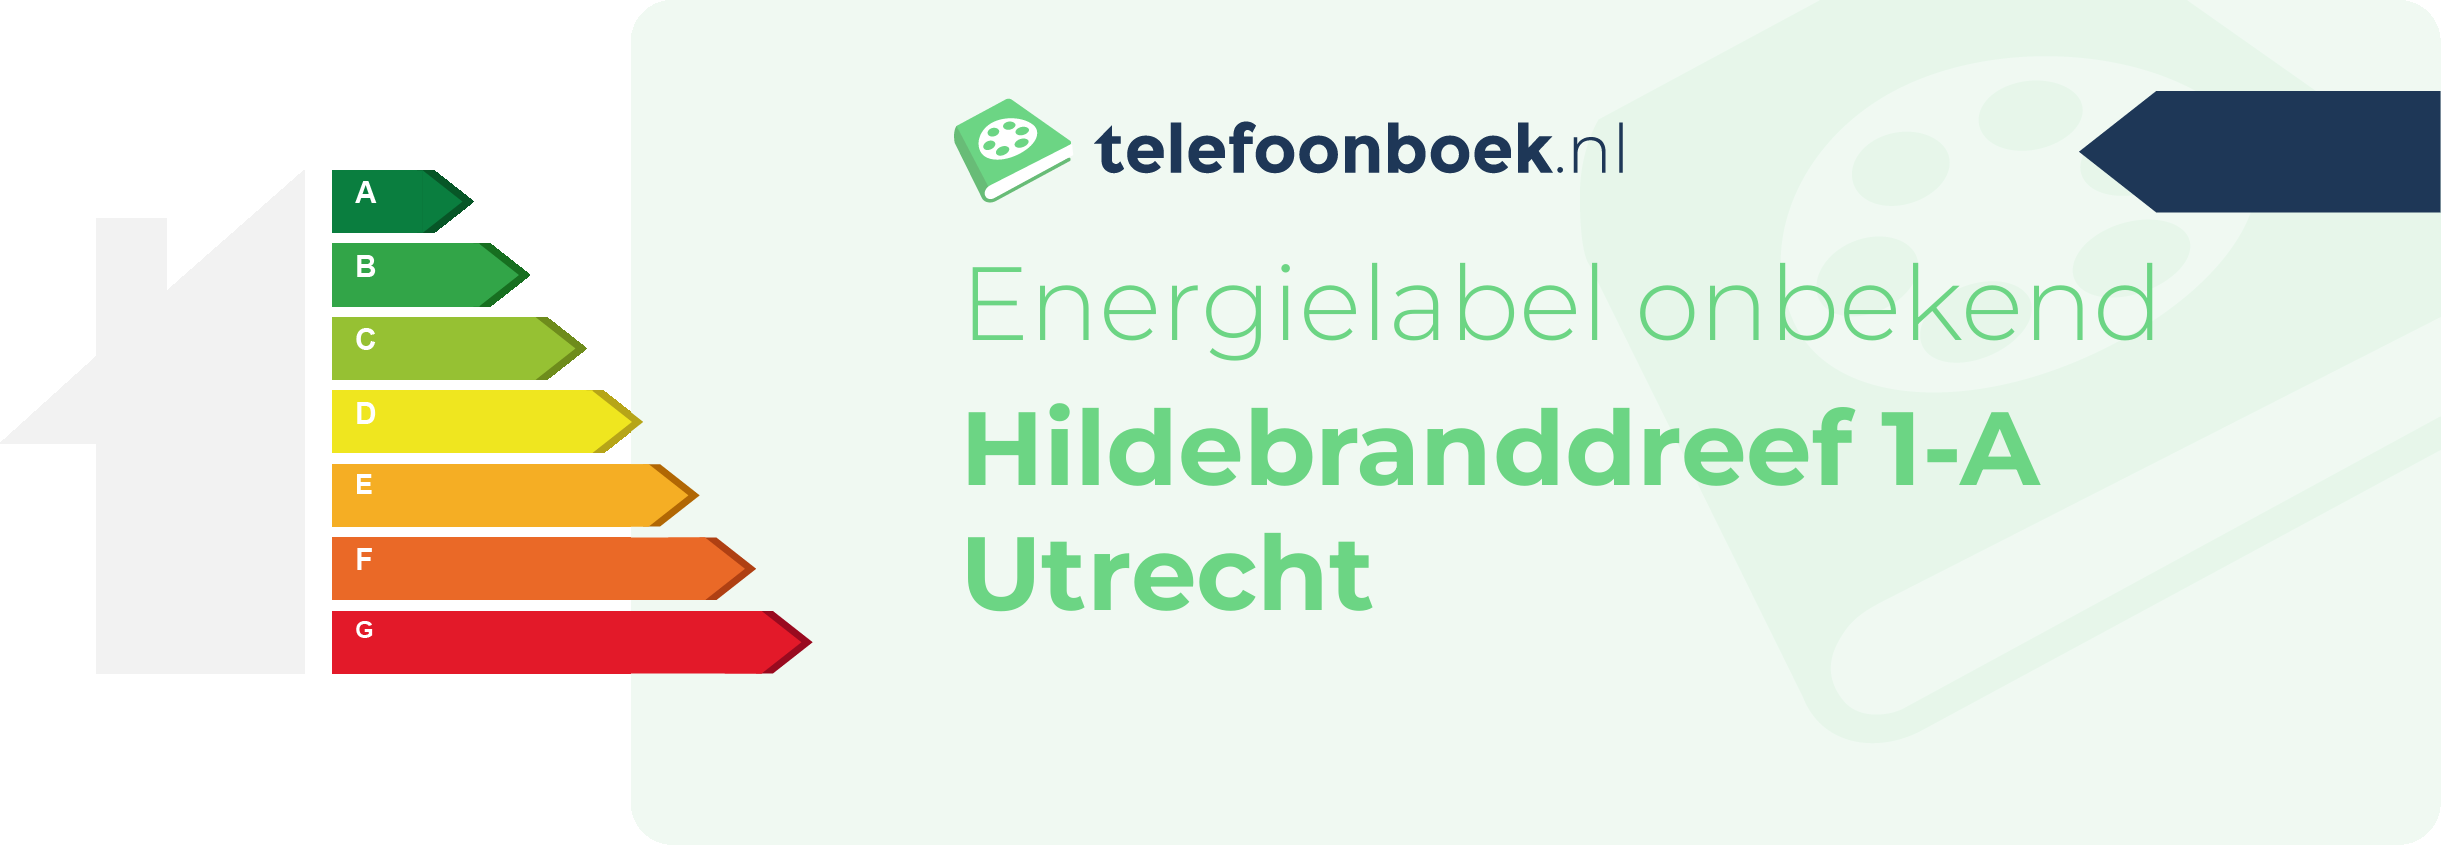 Energielabel Hildebranddreef 1-A Utrecht